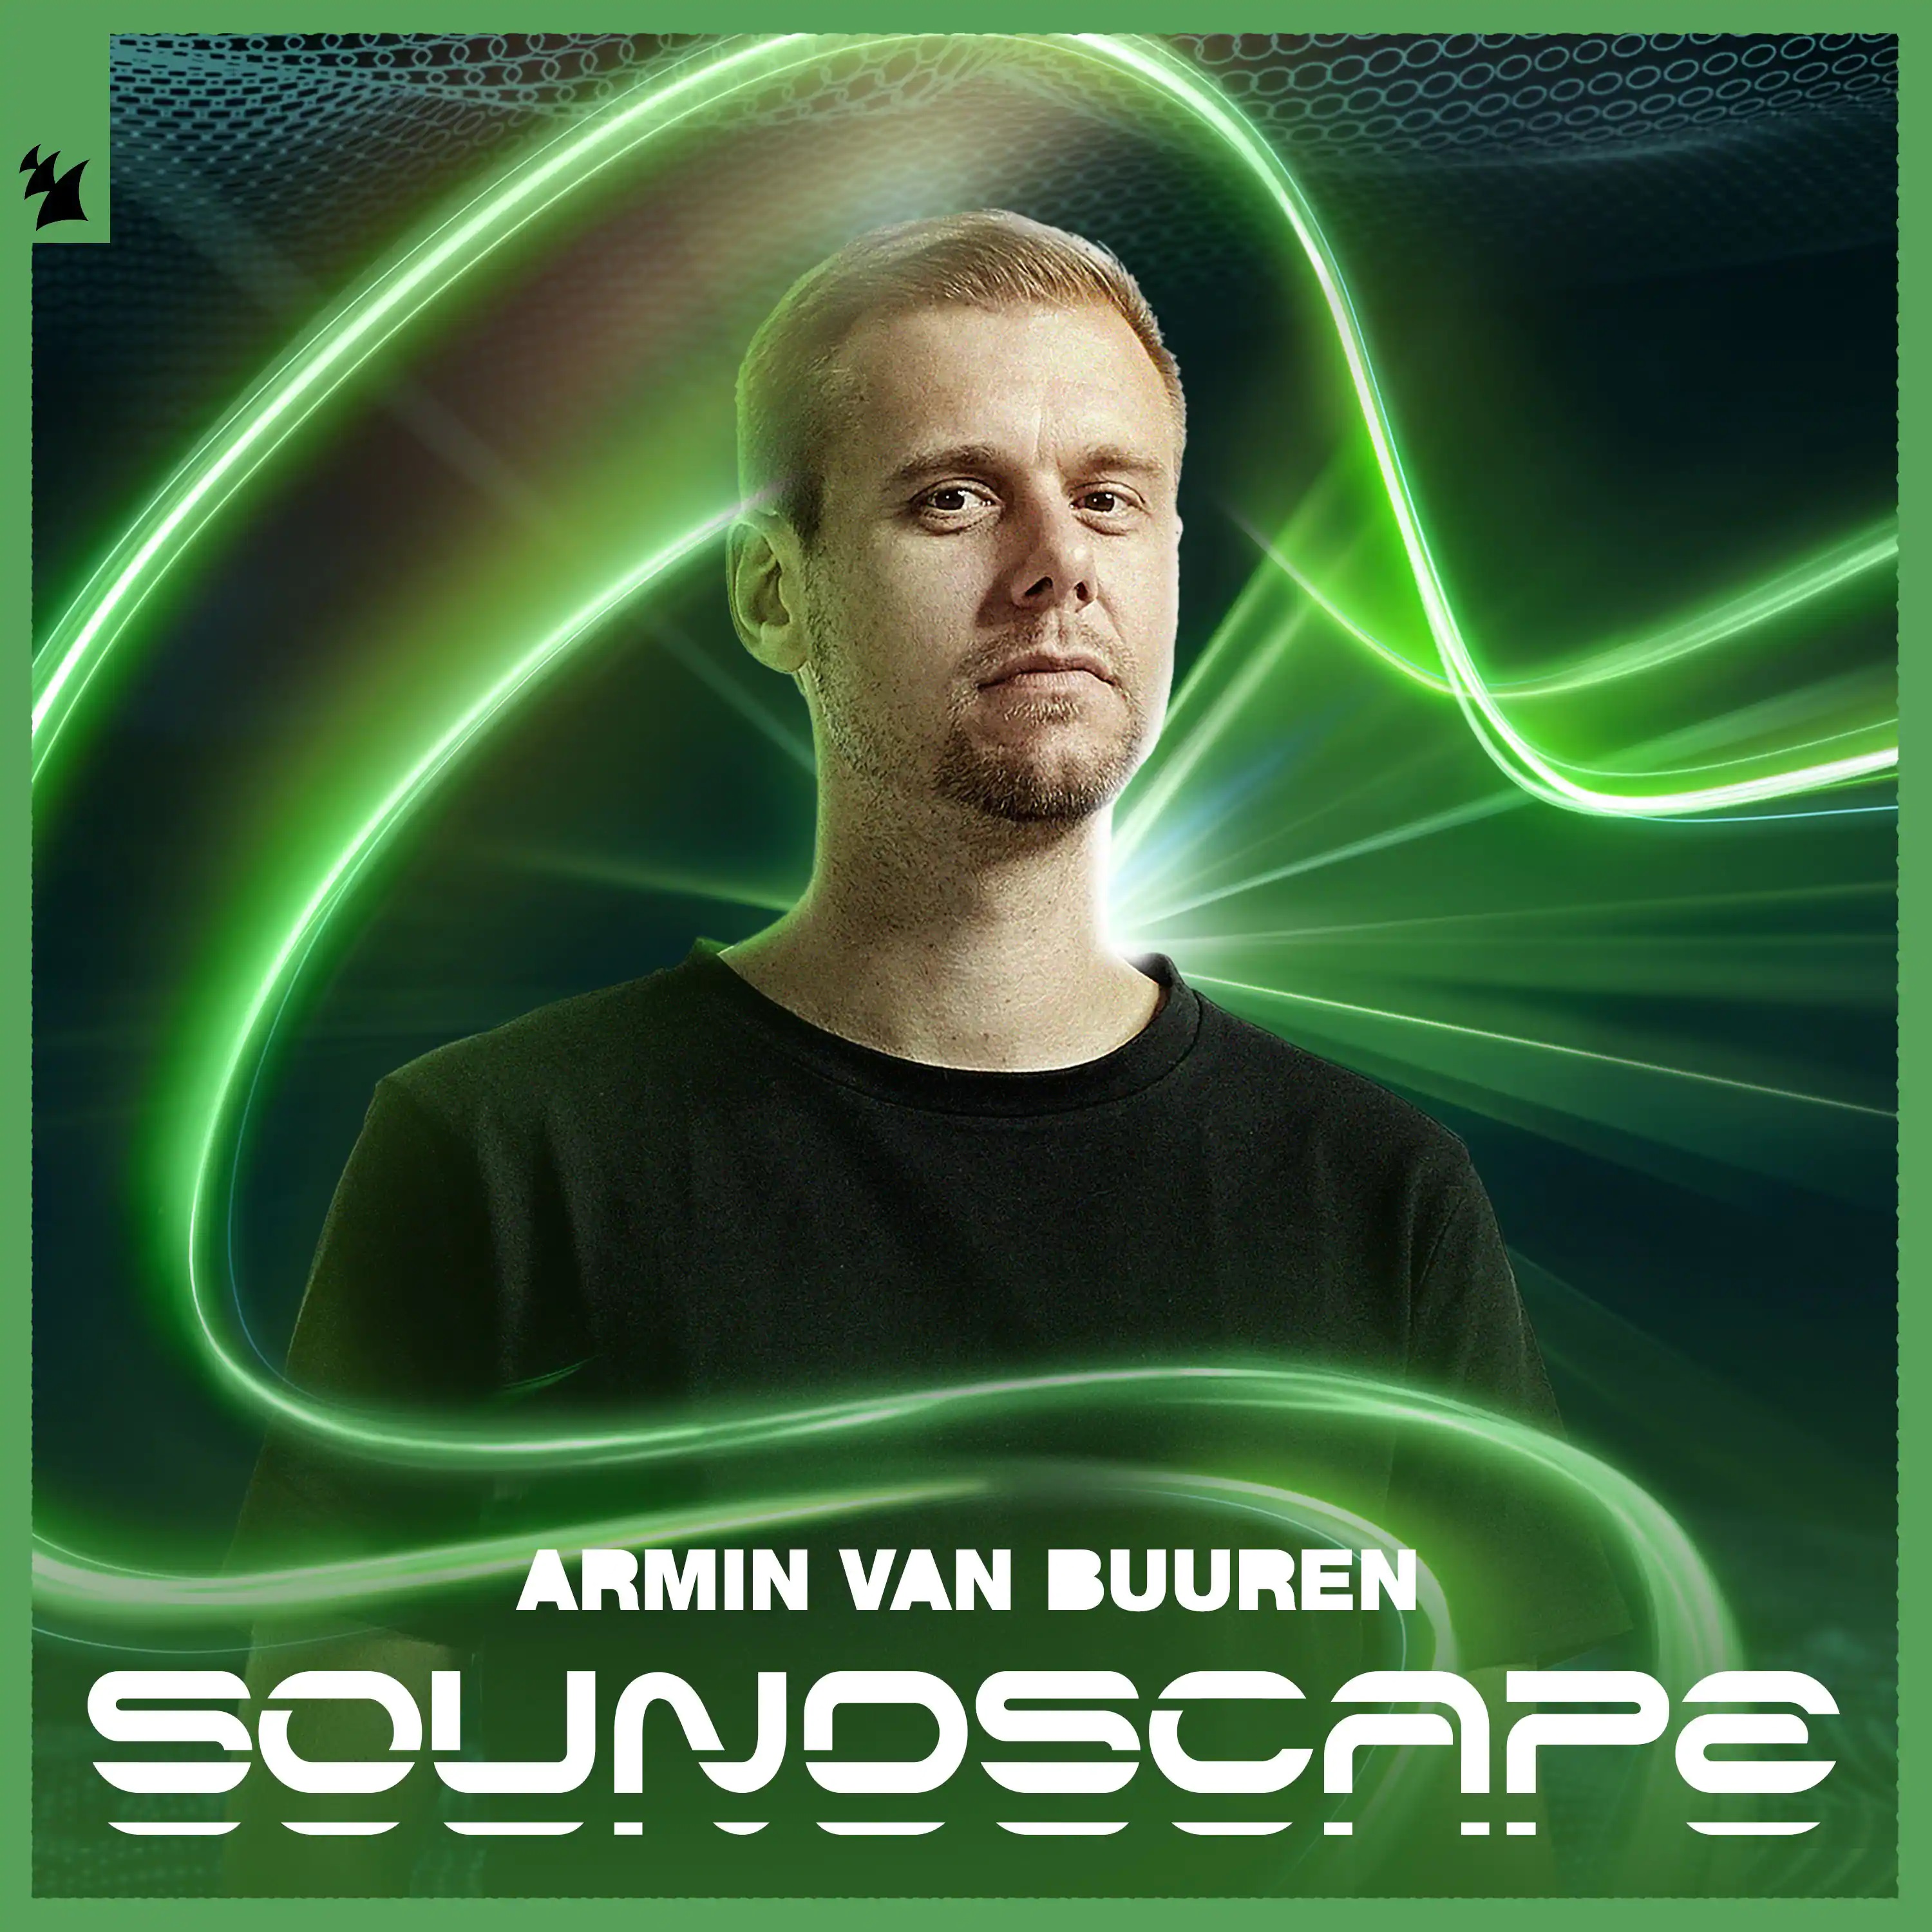 Armin van Buuren — Soundscape cover artwork